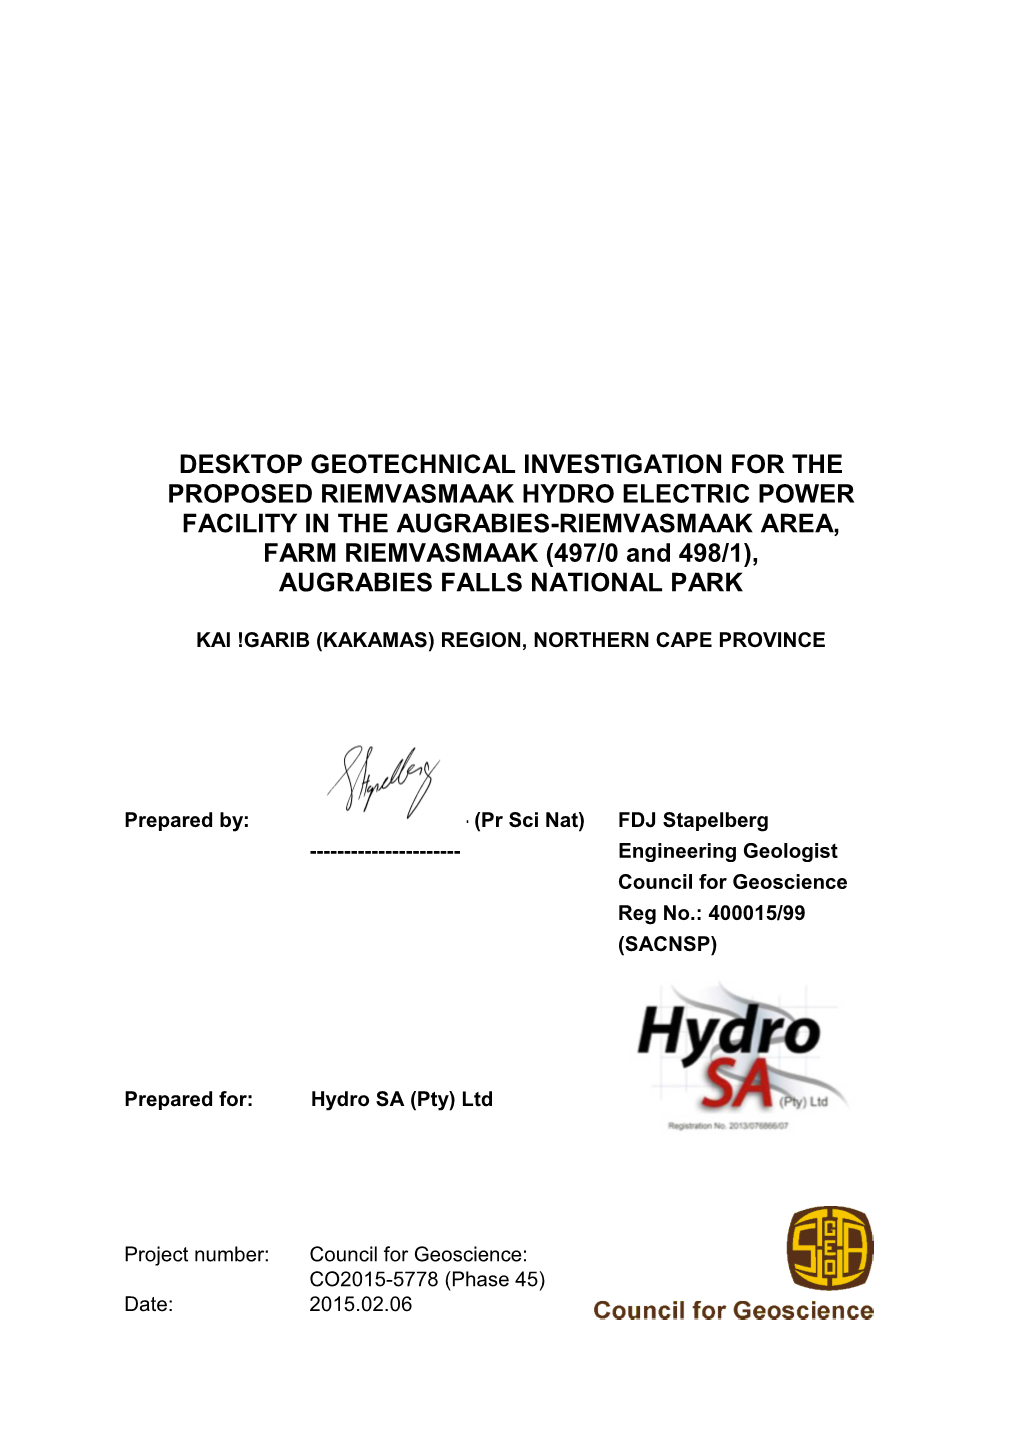 Rienvasmaak-Augrabies Hydro Geotechnical Desk Study